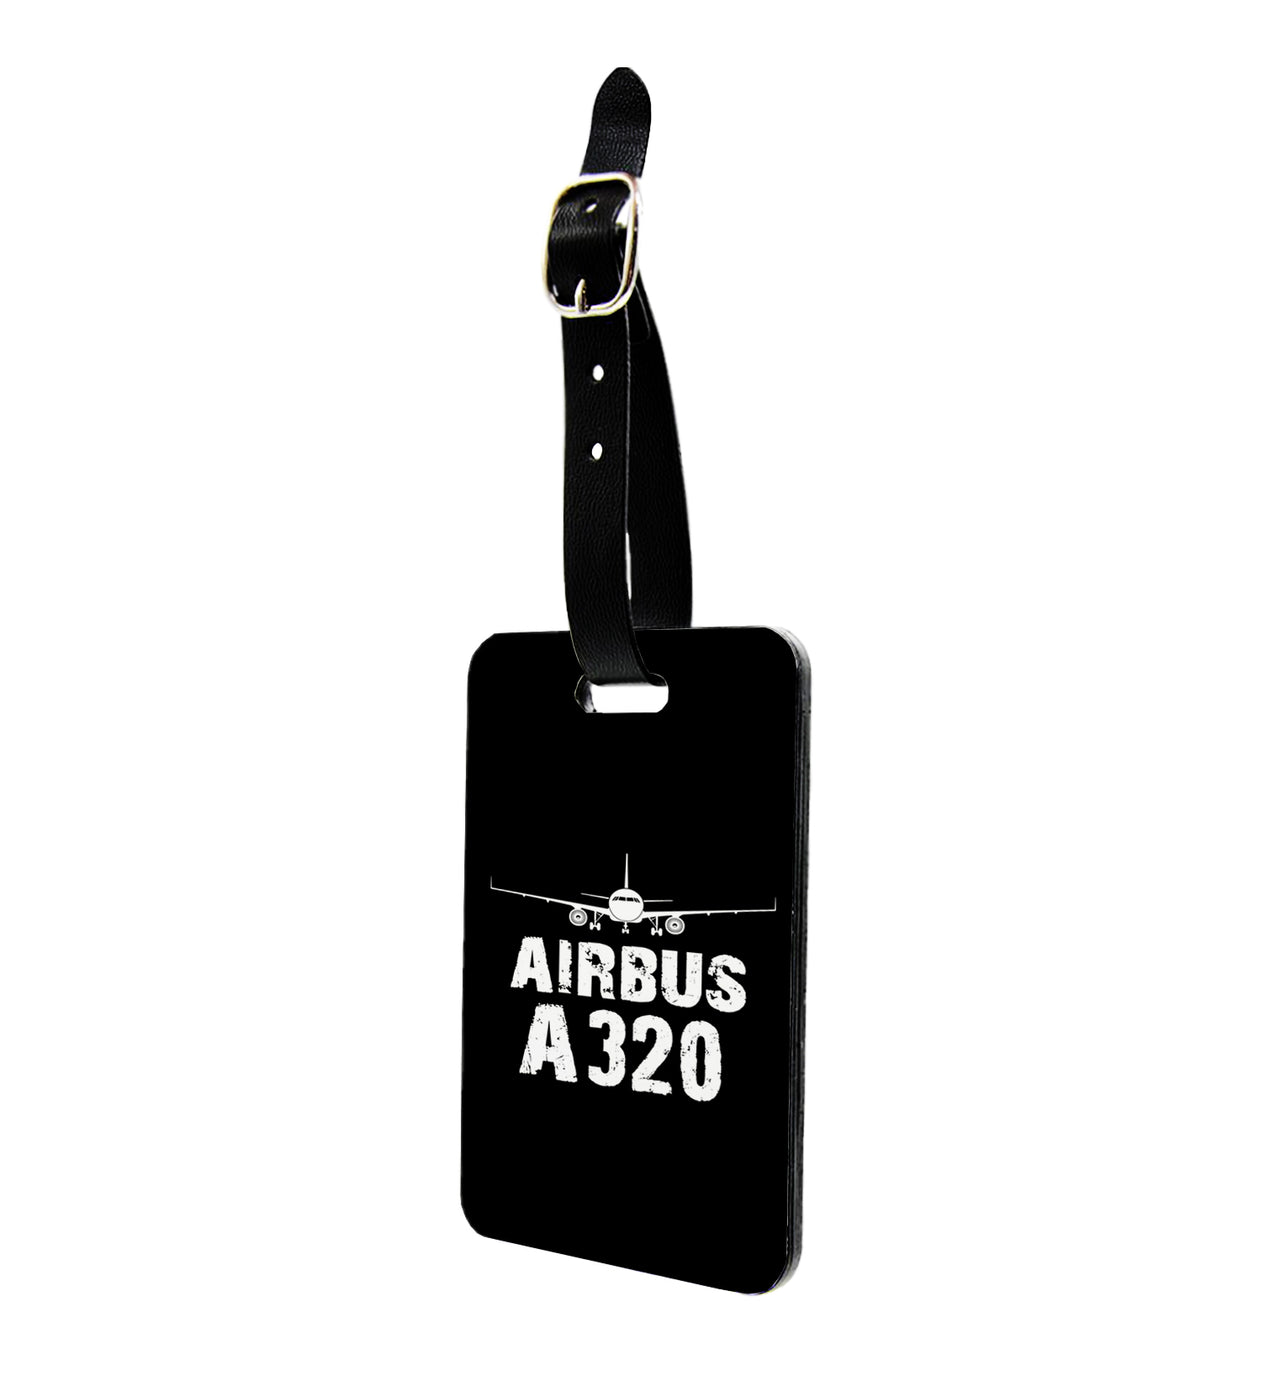 Airbus A320 & Plane Designed Luggage Tag